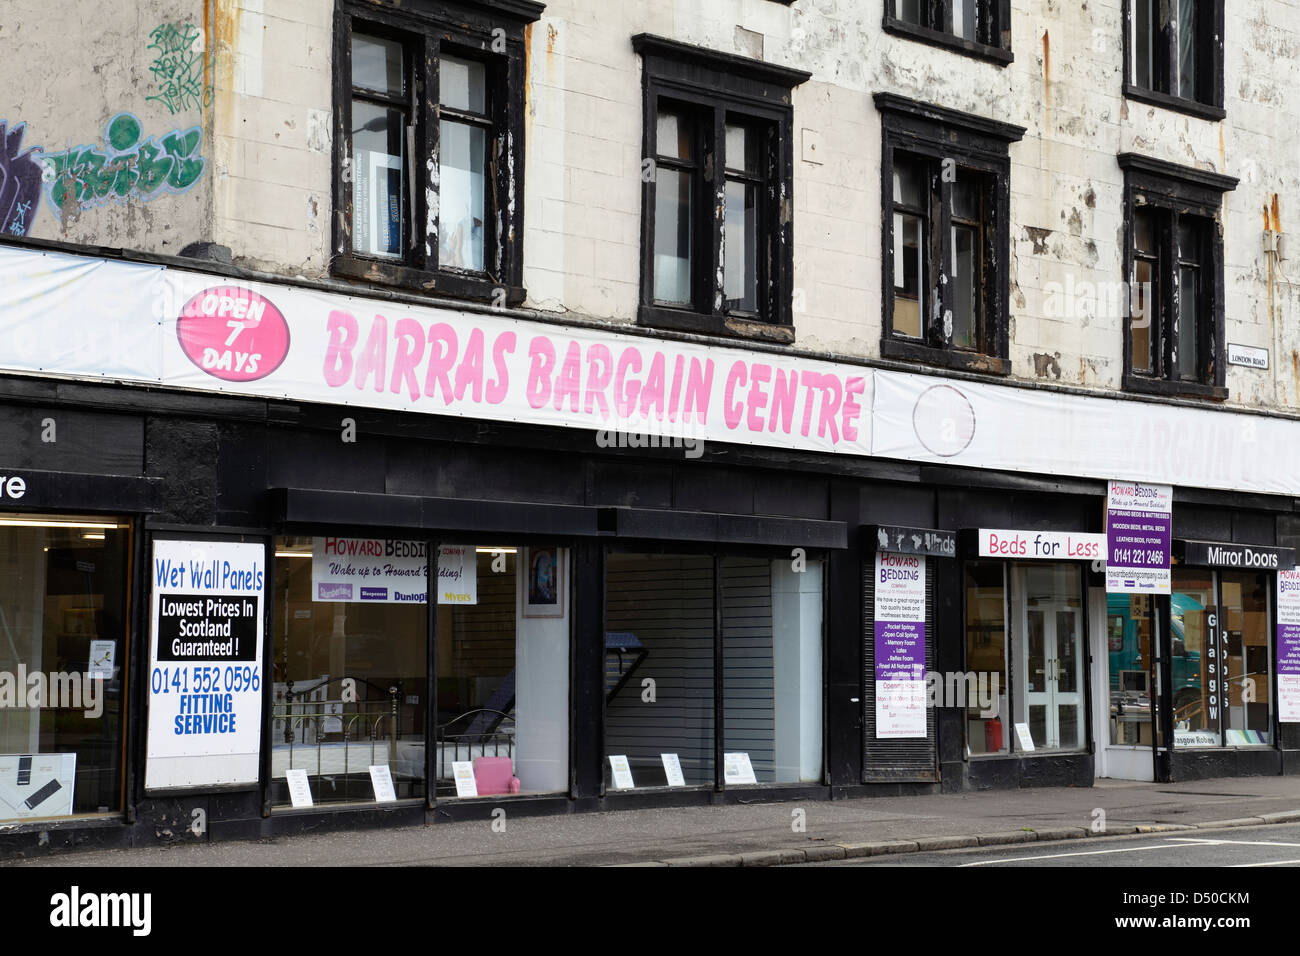 the-barras-bargain-centre-on-london-road-glasgow-scotland-uk-D50CKM.jpg